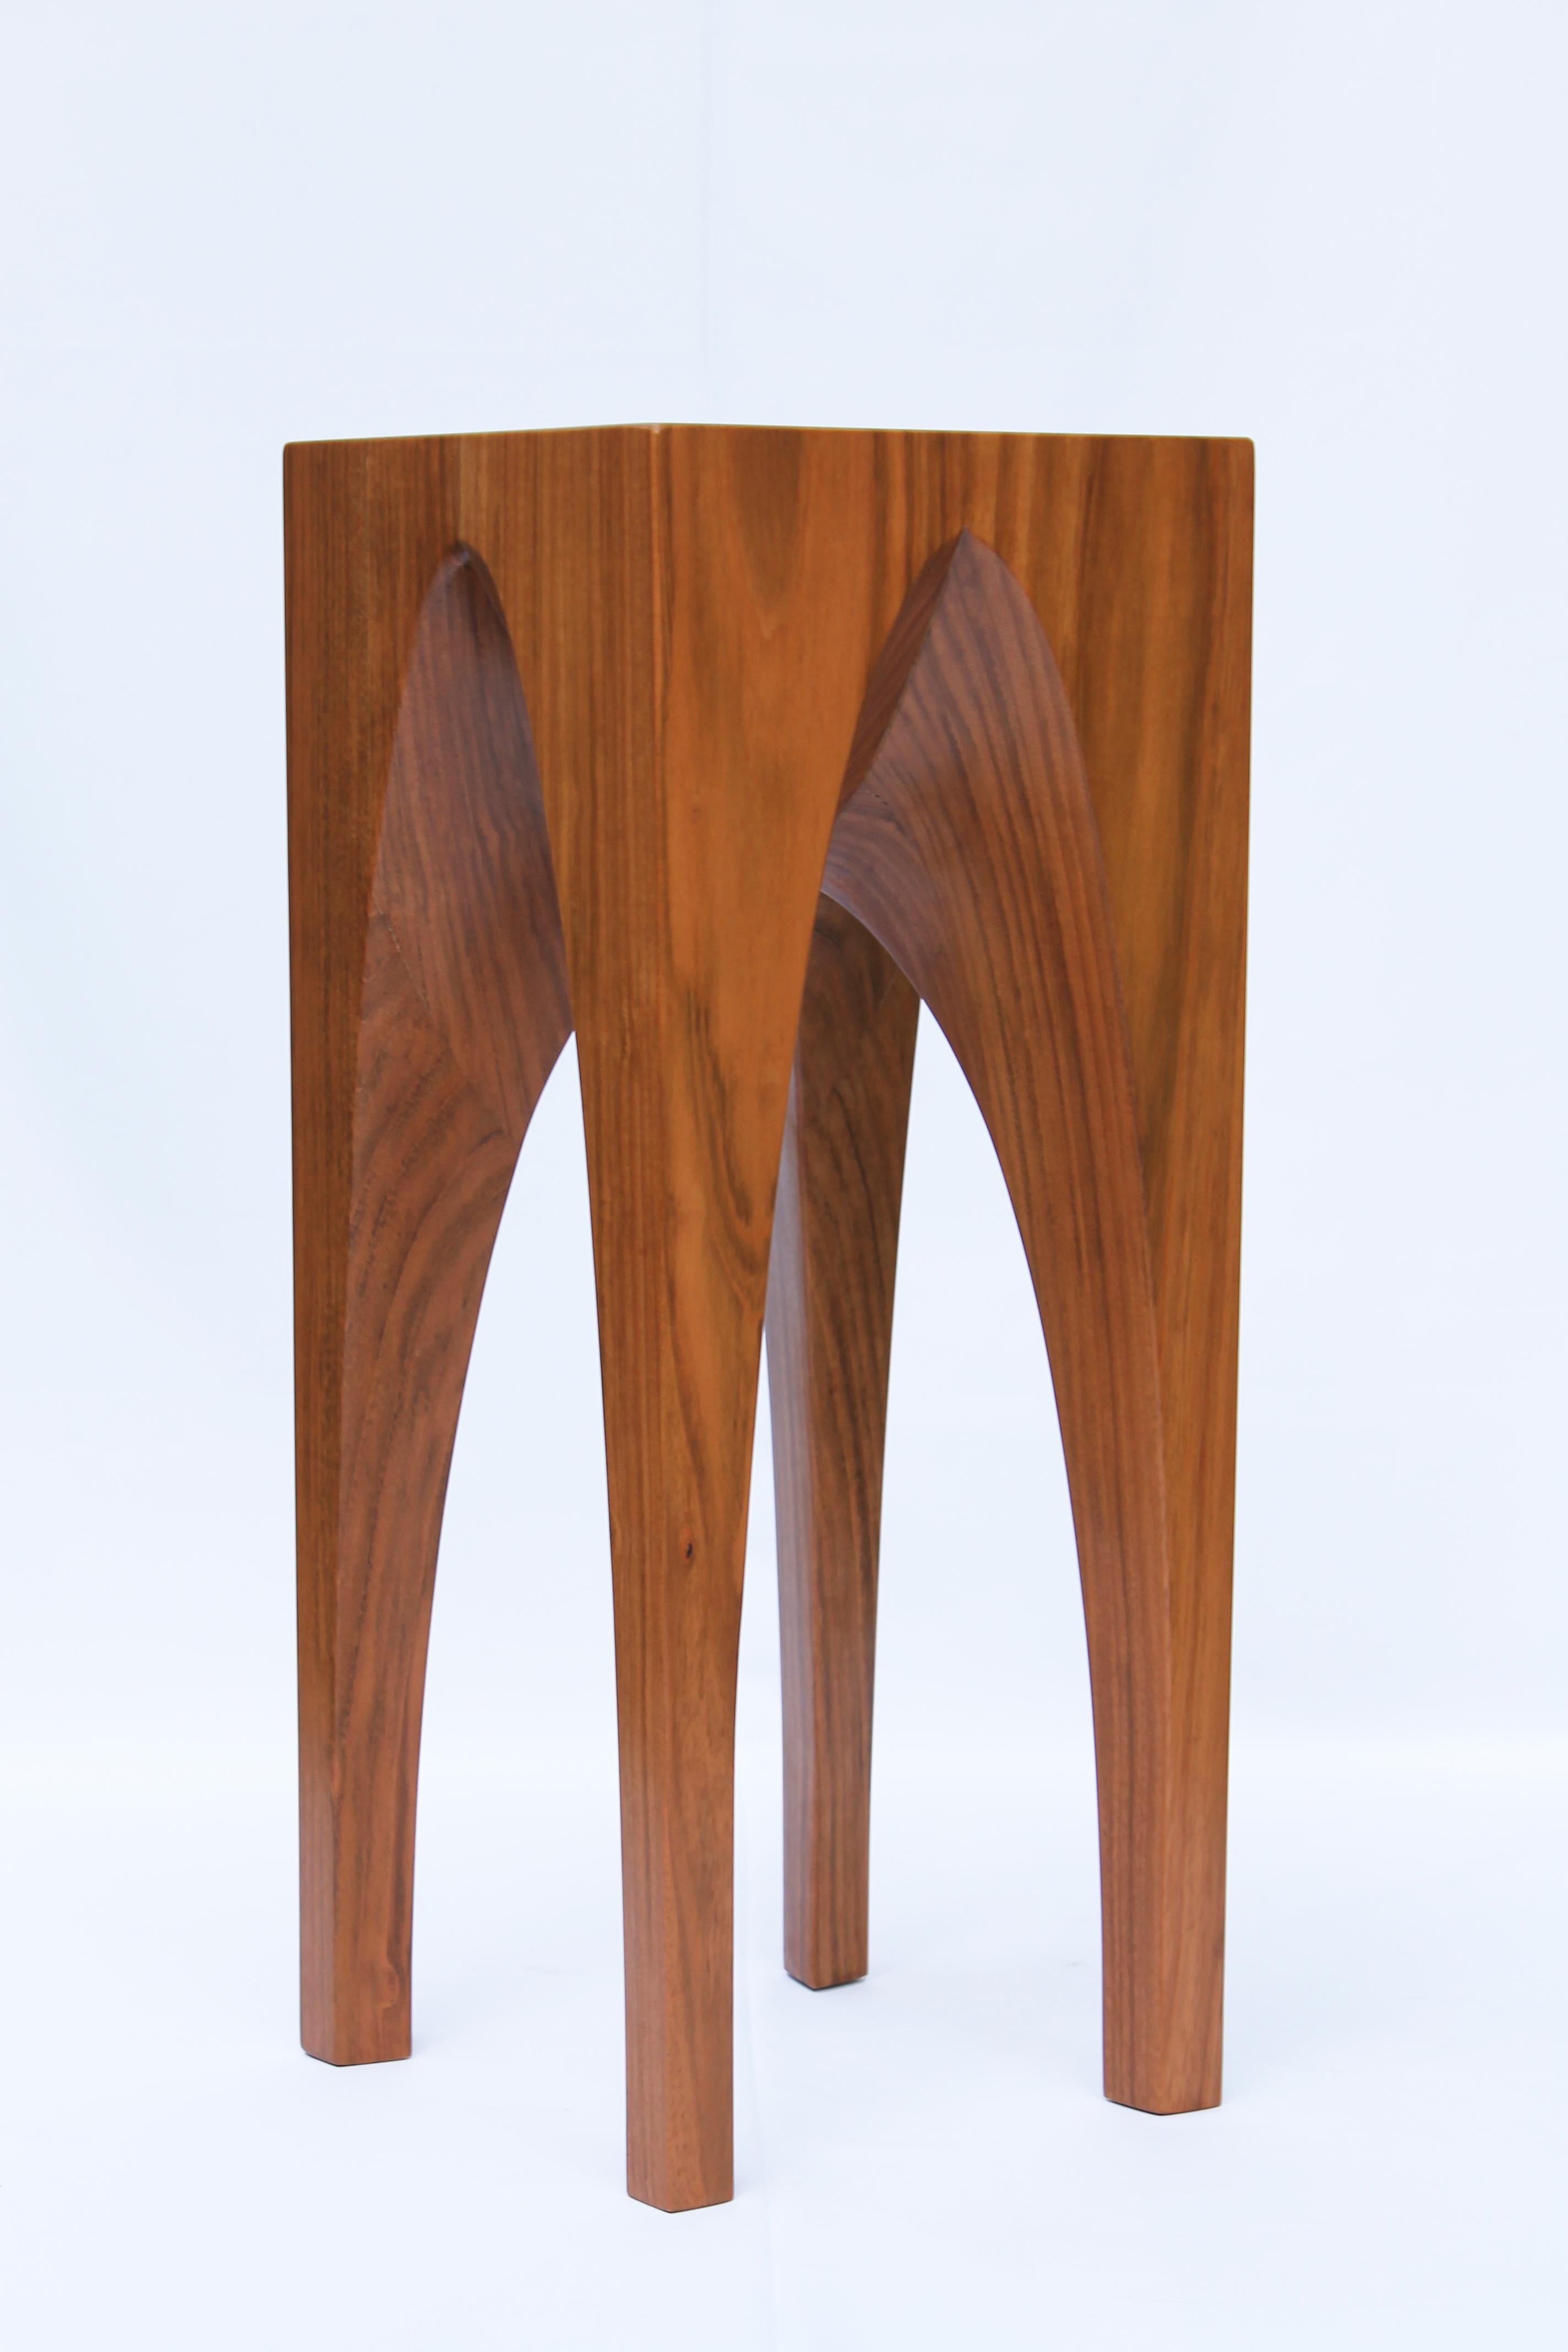 Brazilian Arch Side Table - Catenary Arch (Jatobá wood) For Sale